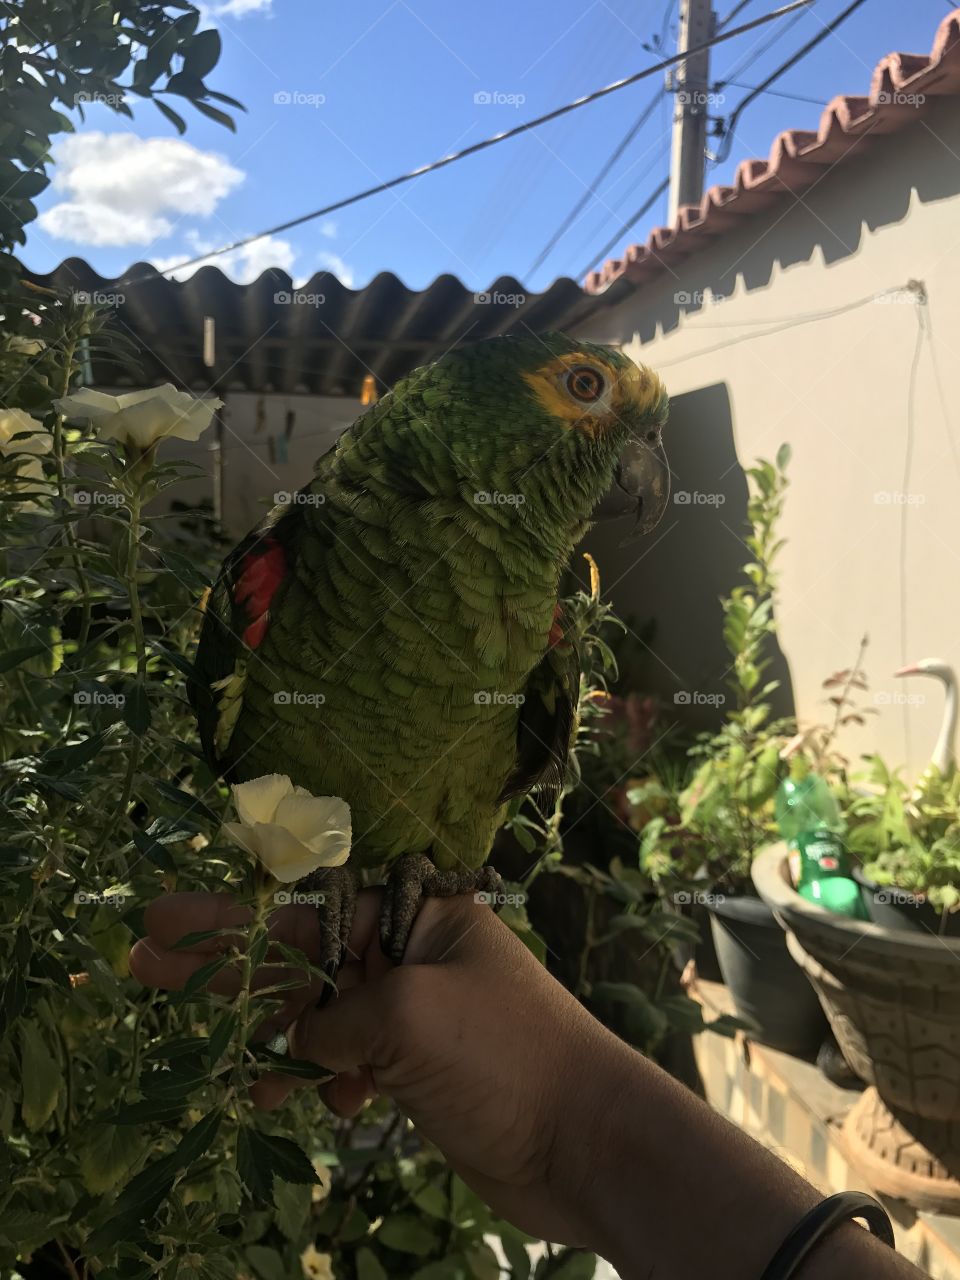 Loro papagaio verdadeiro, fauna brasileira